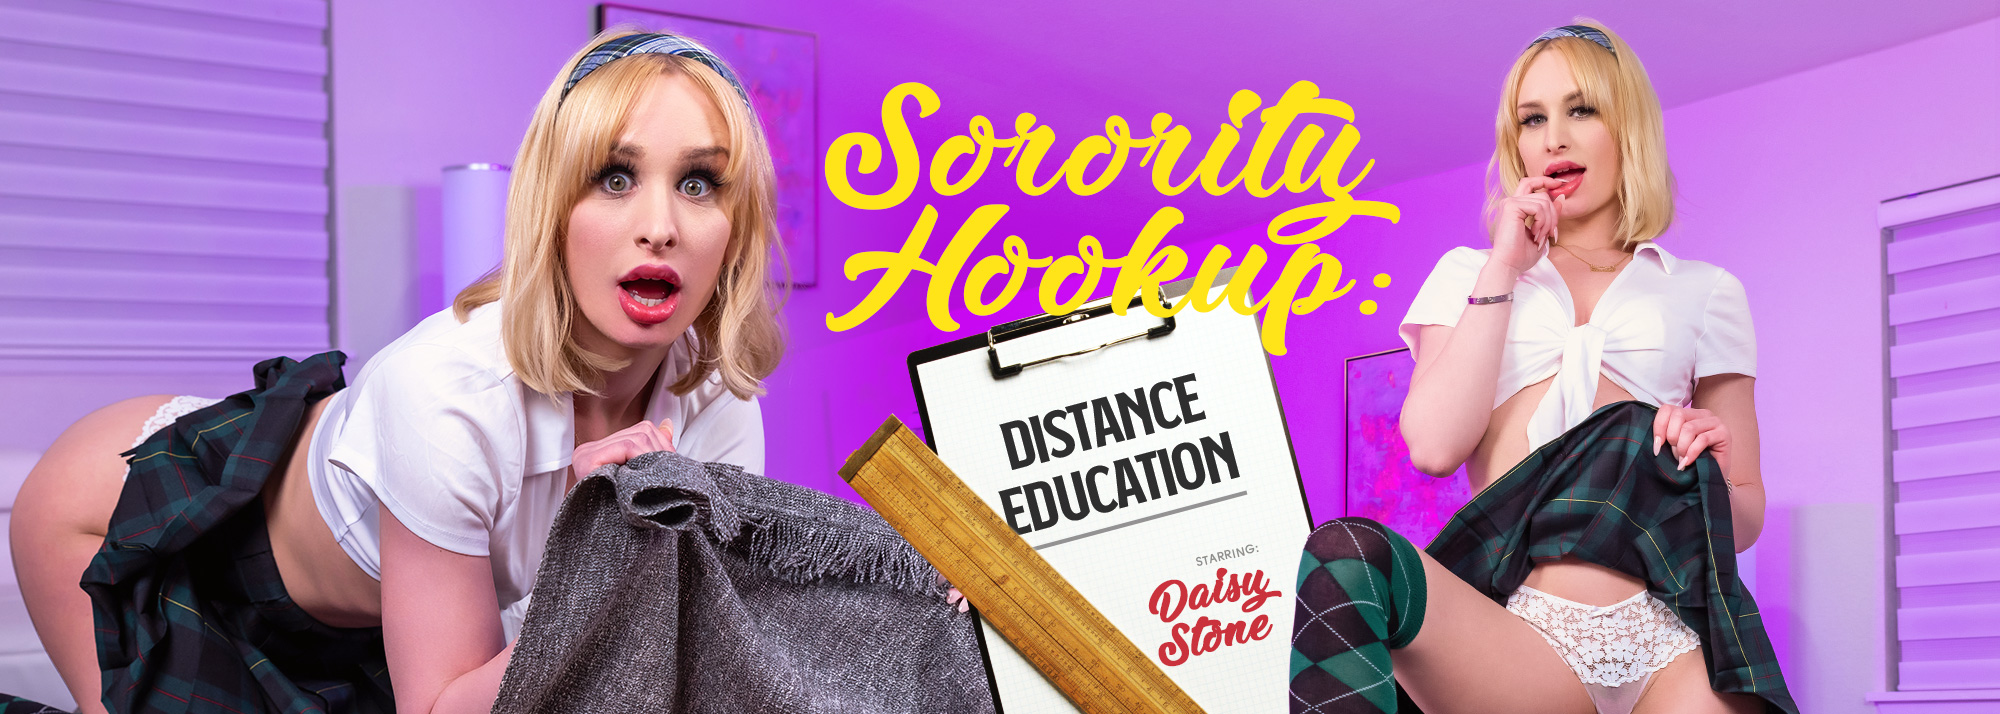 Sorority Hookup: Distance Education with Daisy Stone  Slideshow